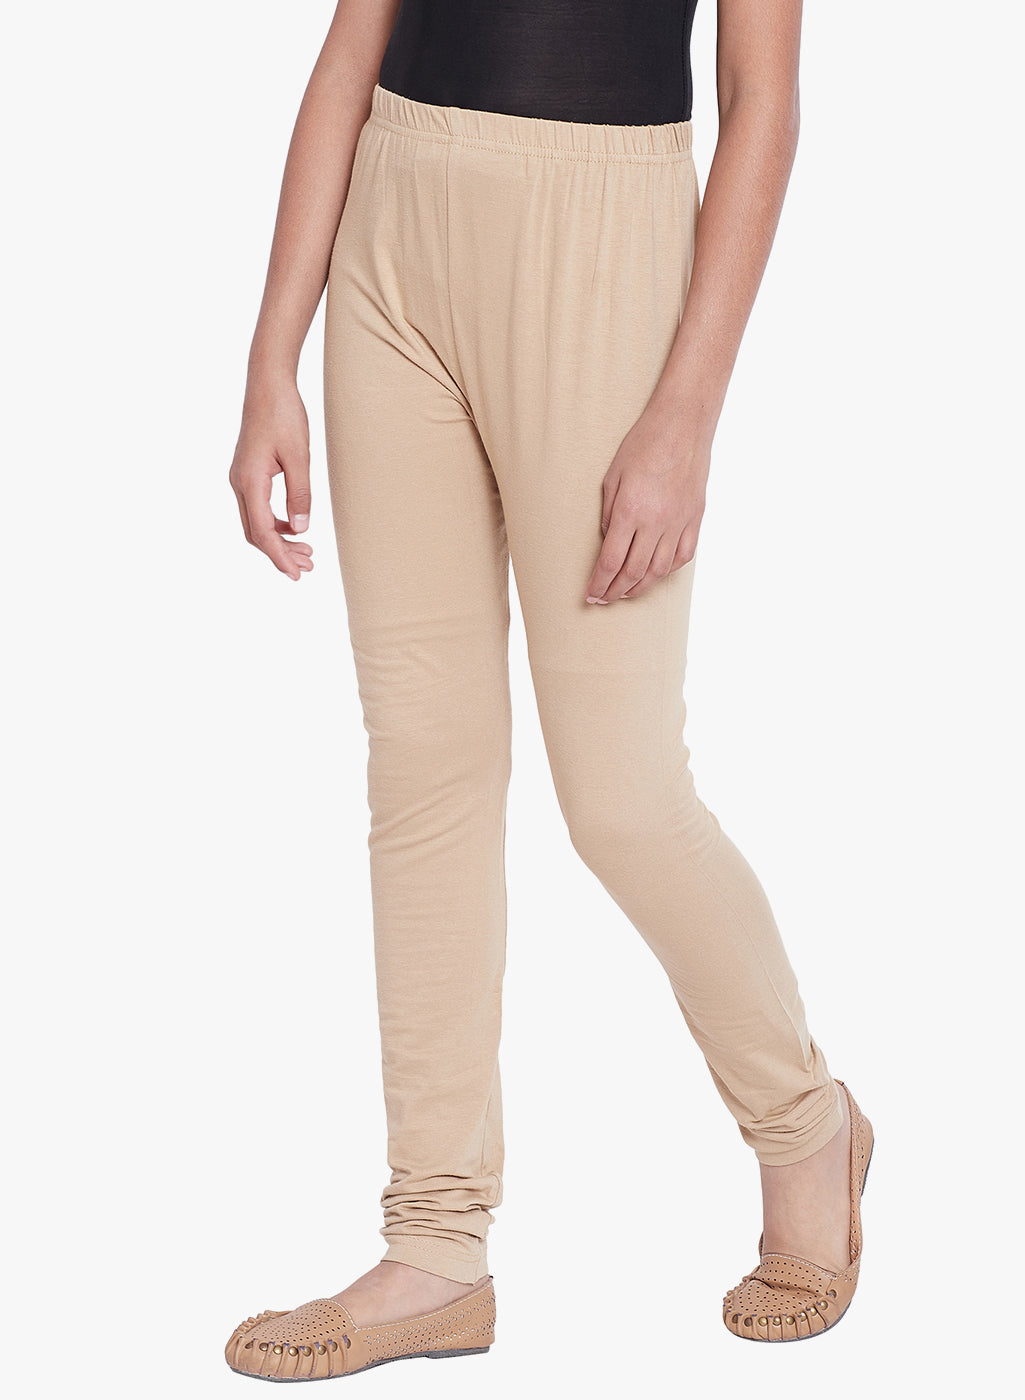 Cream Leggings with Elasticated Waistband  leggings for women – The Pajama  Factory